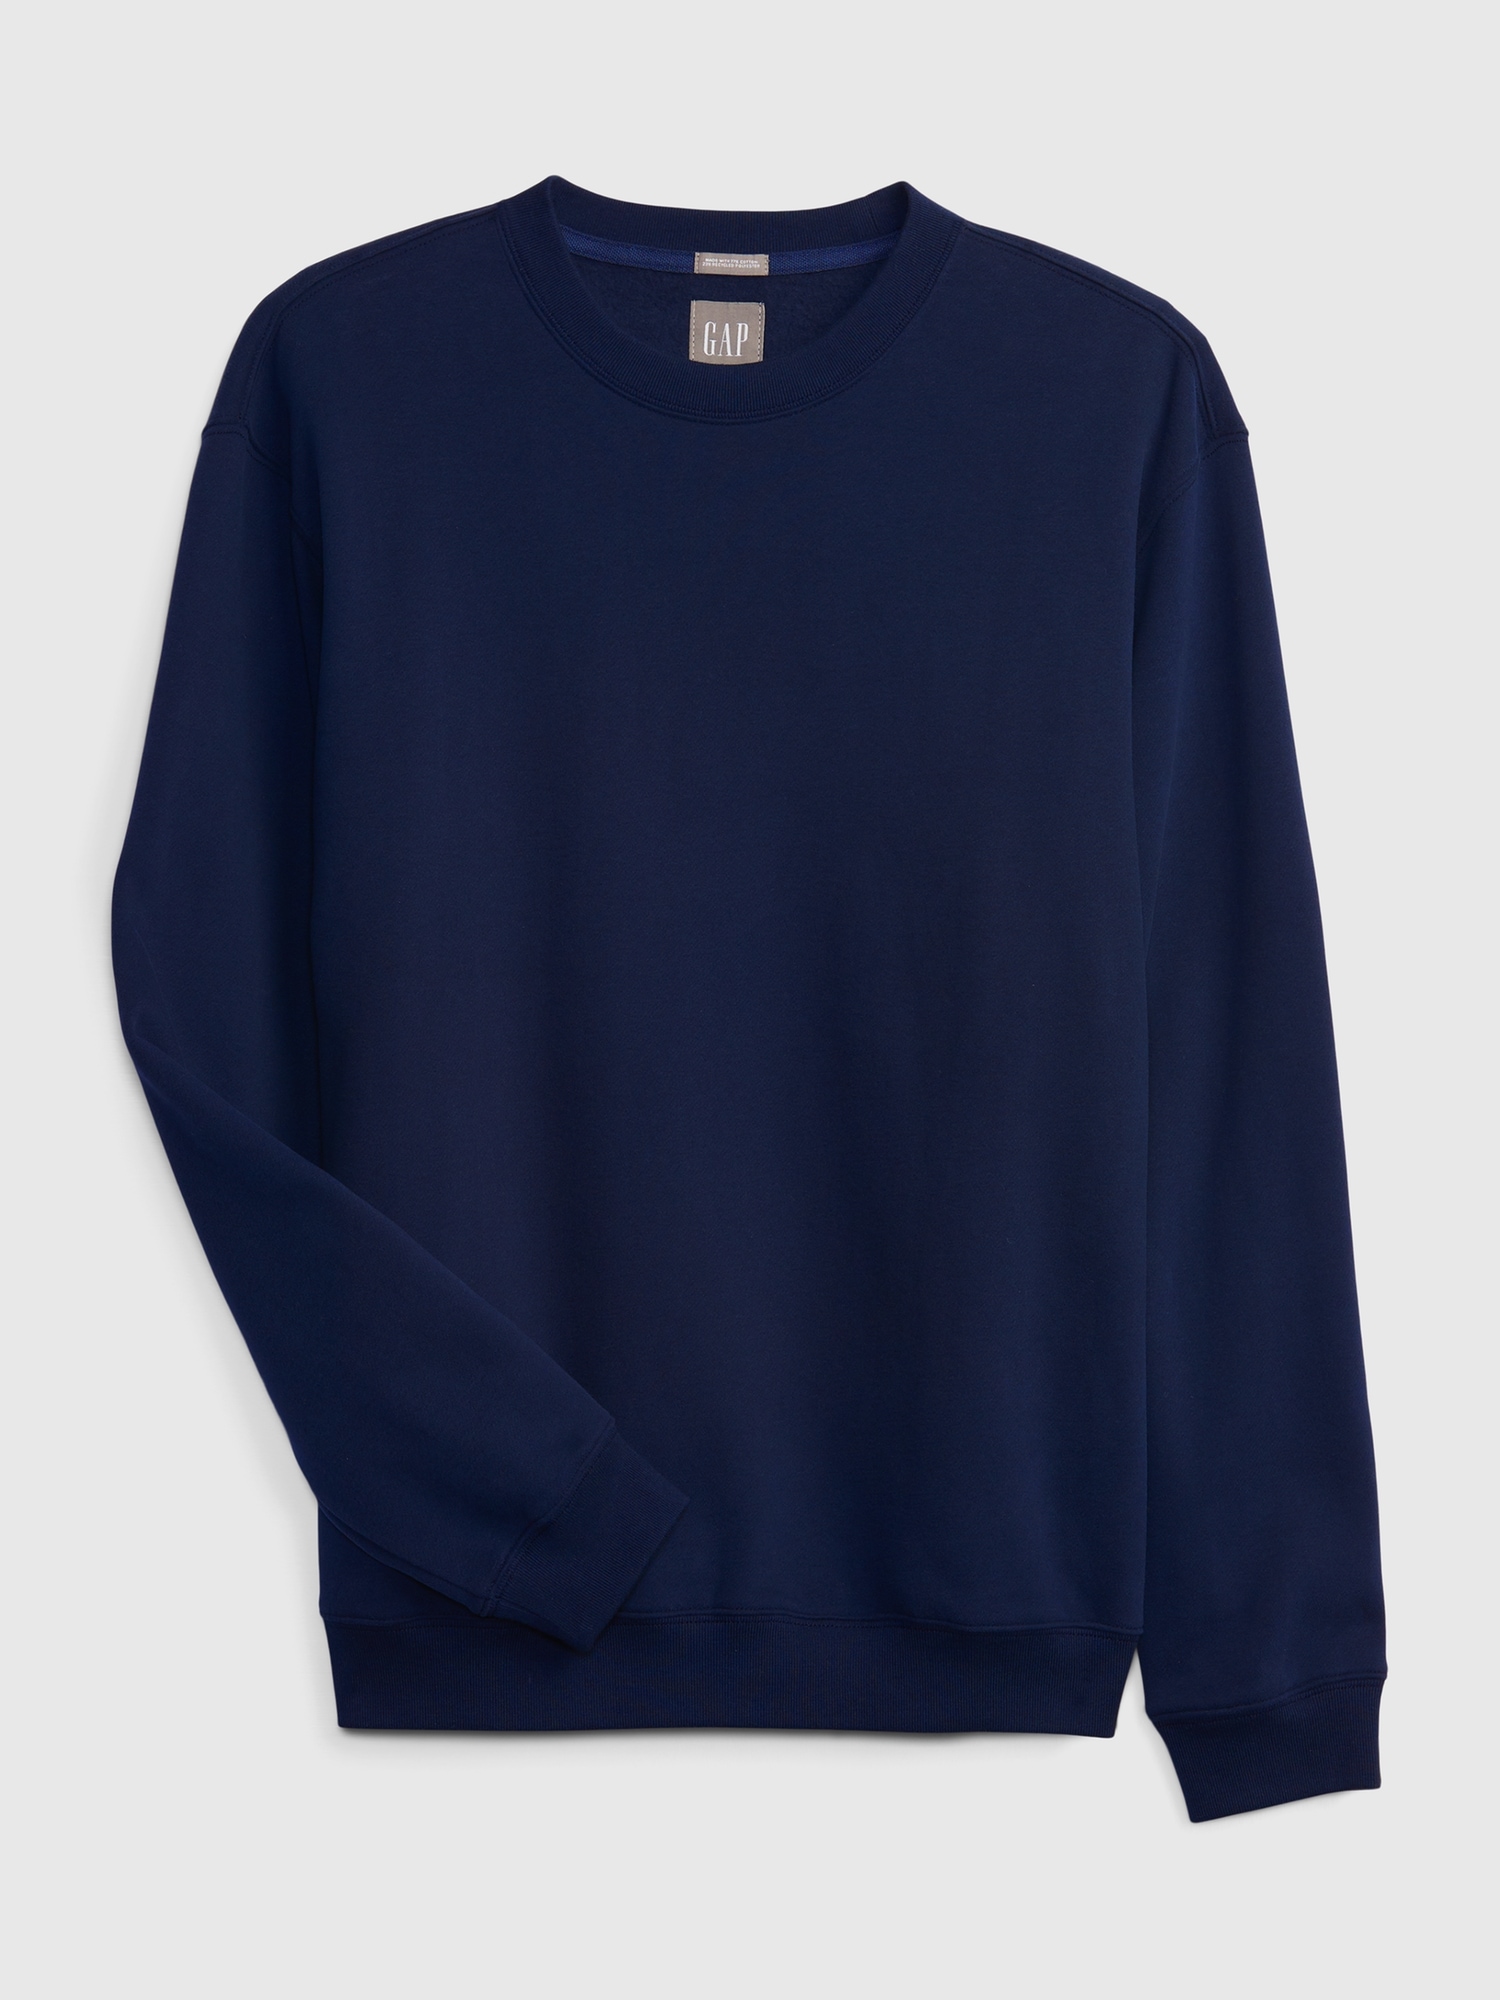 Vintage Soft Crewneck Sweatshirt | Gap